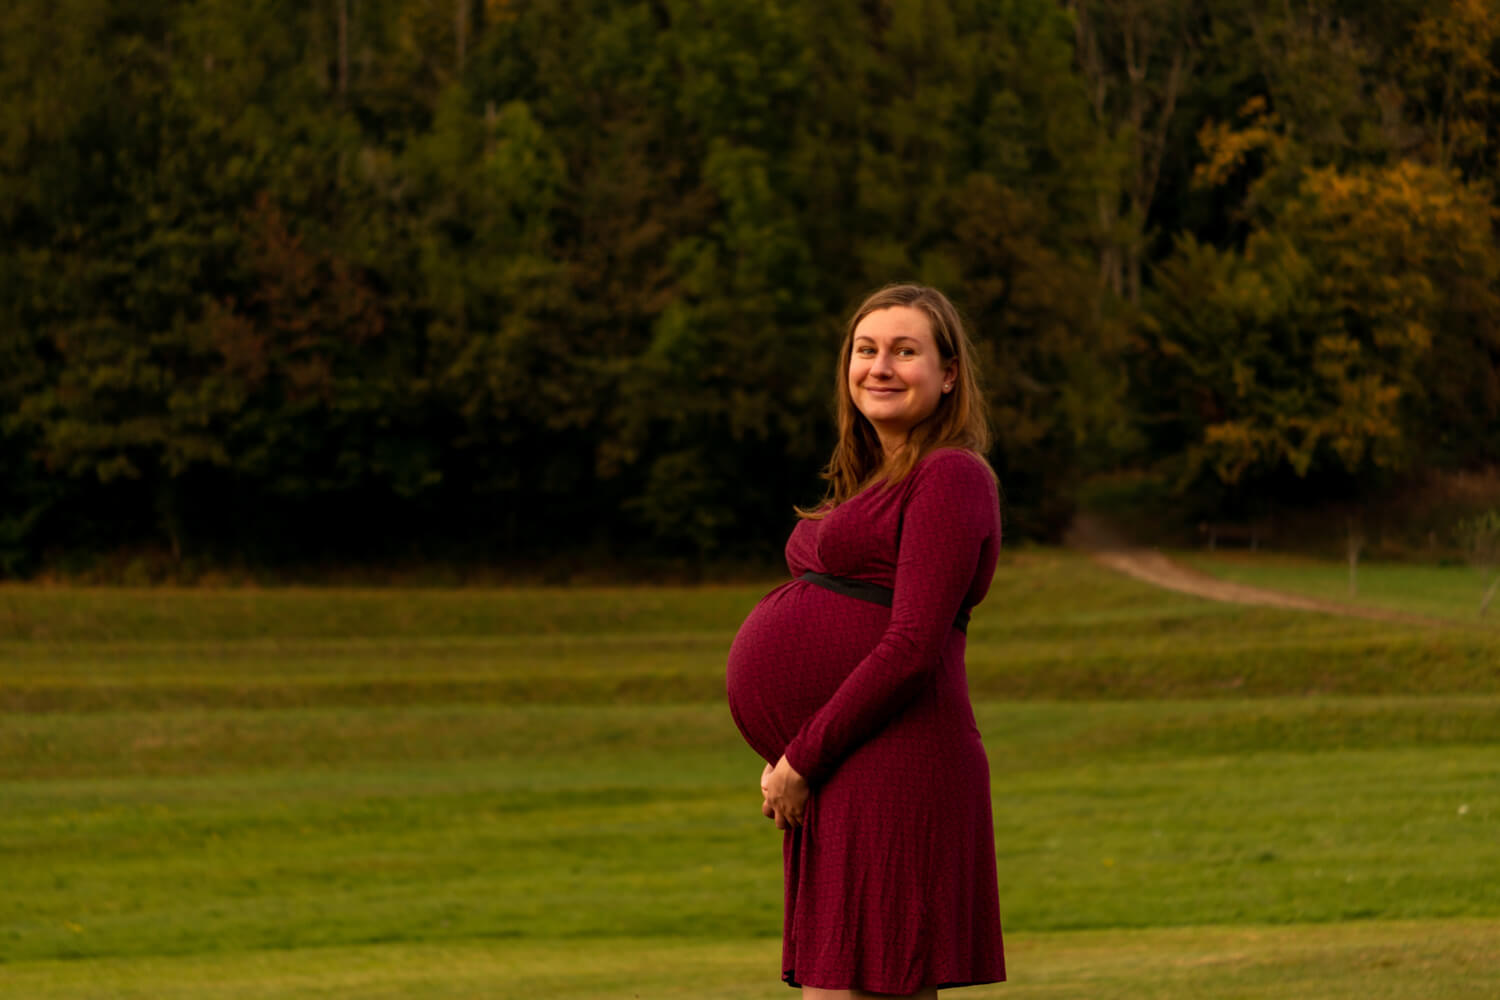 photographe alsace seance famille grossesse nouveau ne